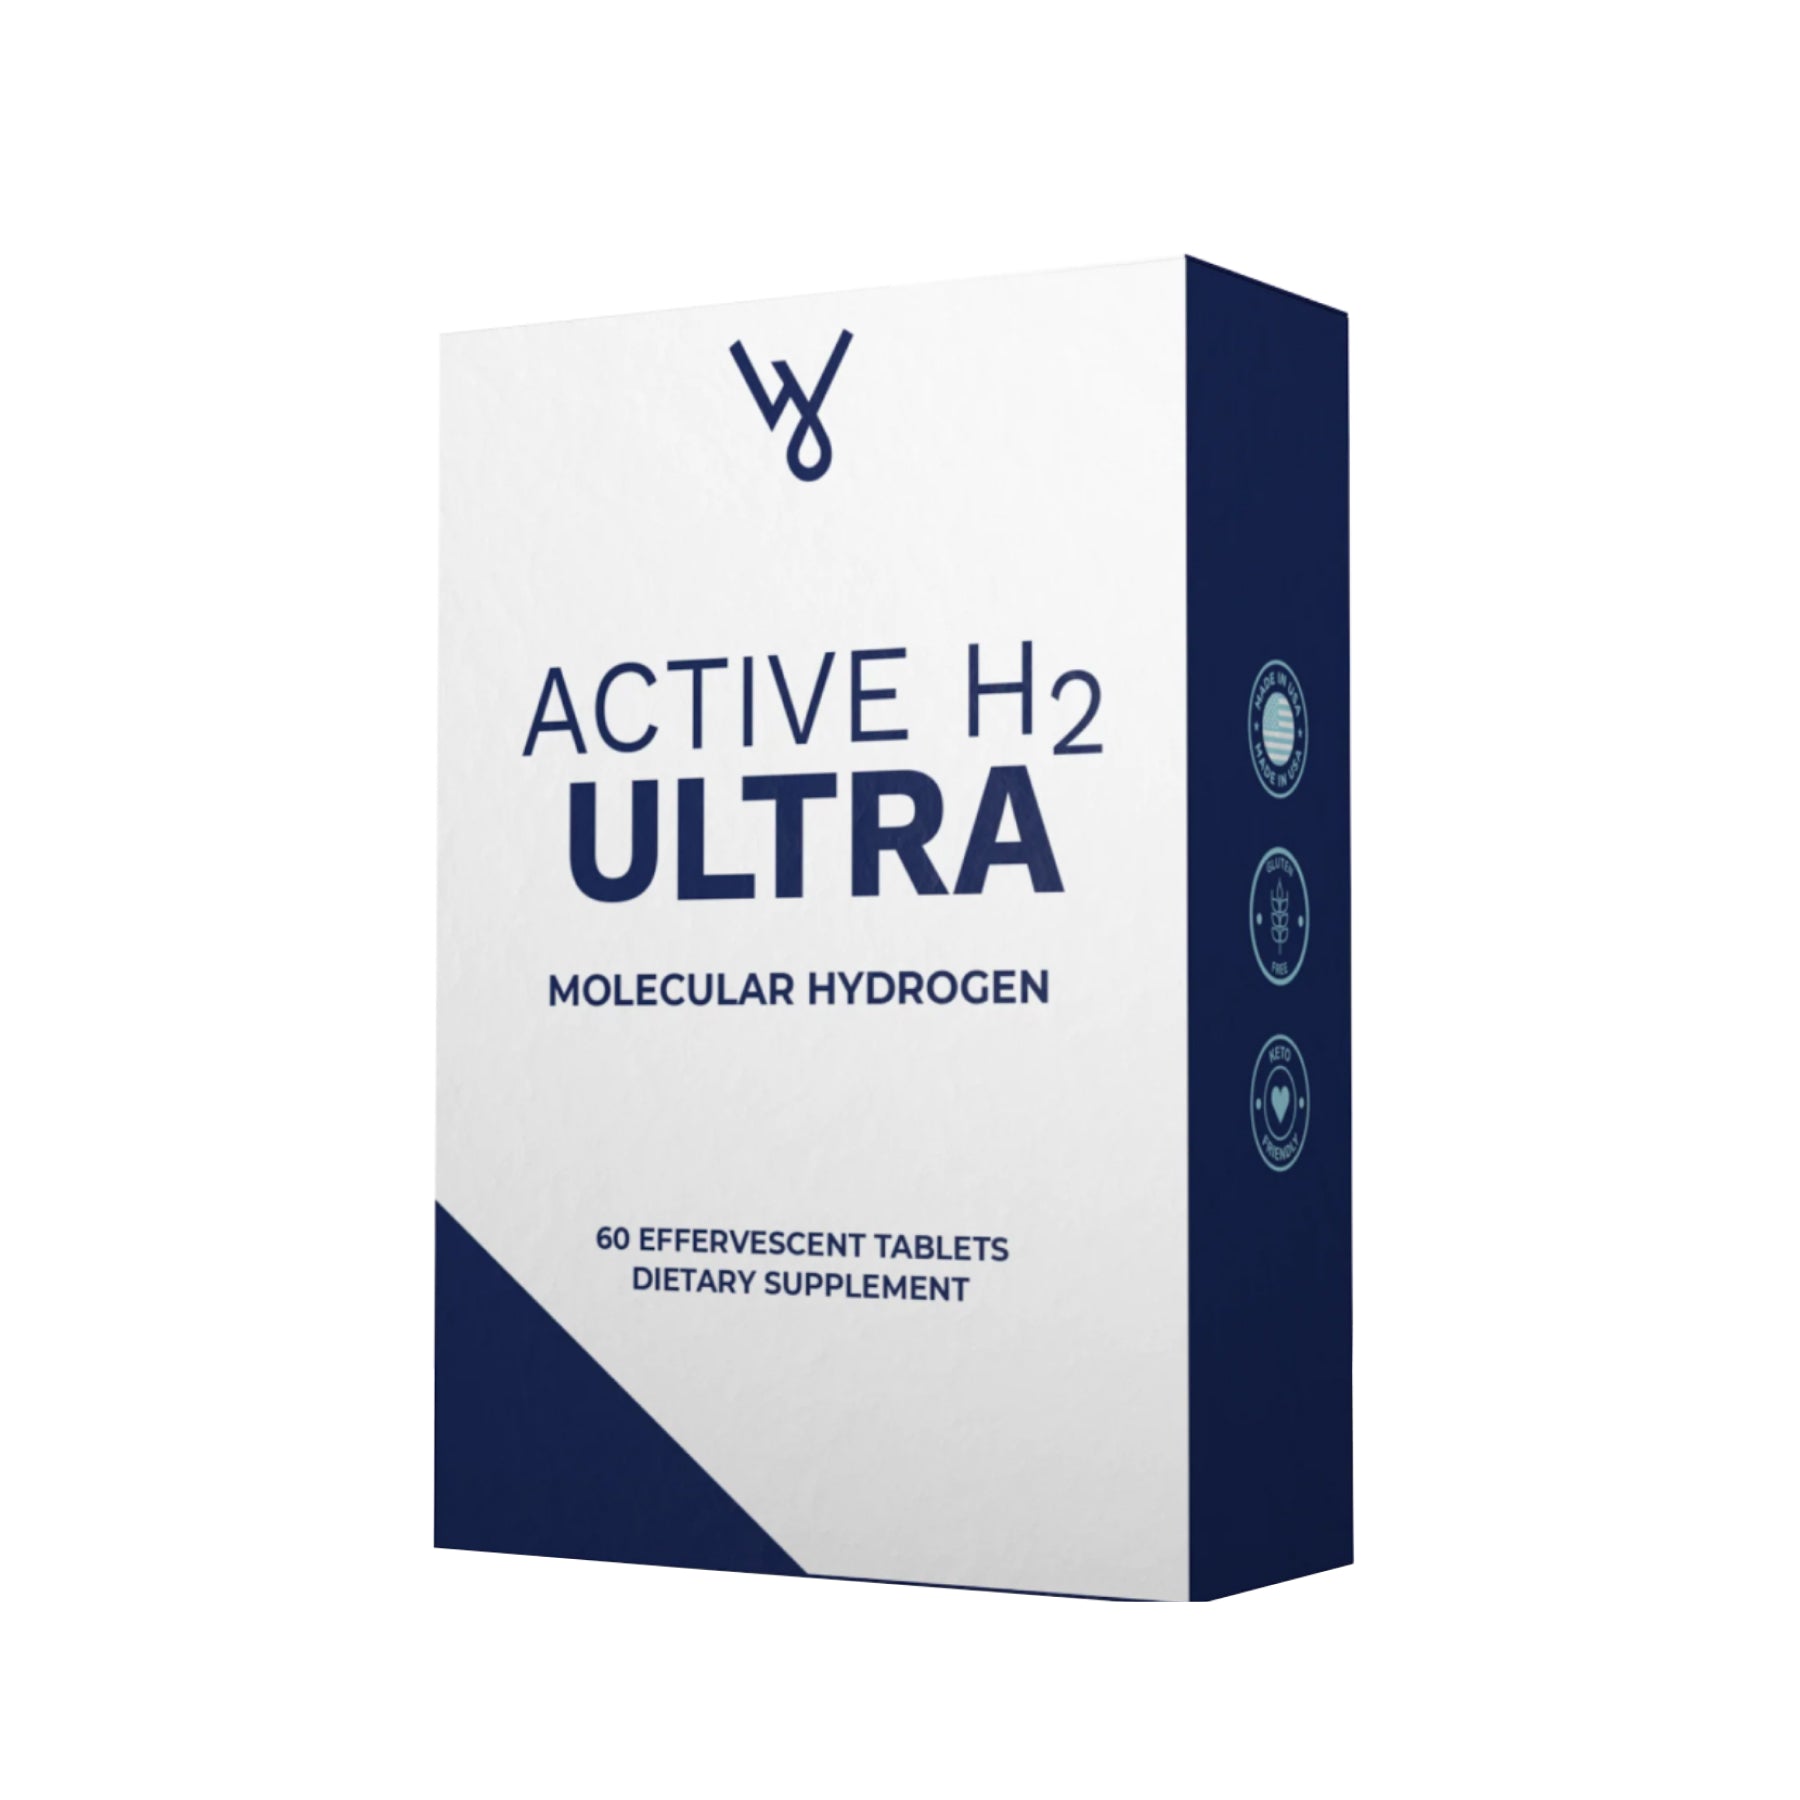 Active H2 ULTRA Molecular Hydrogen